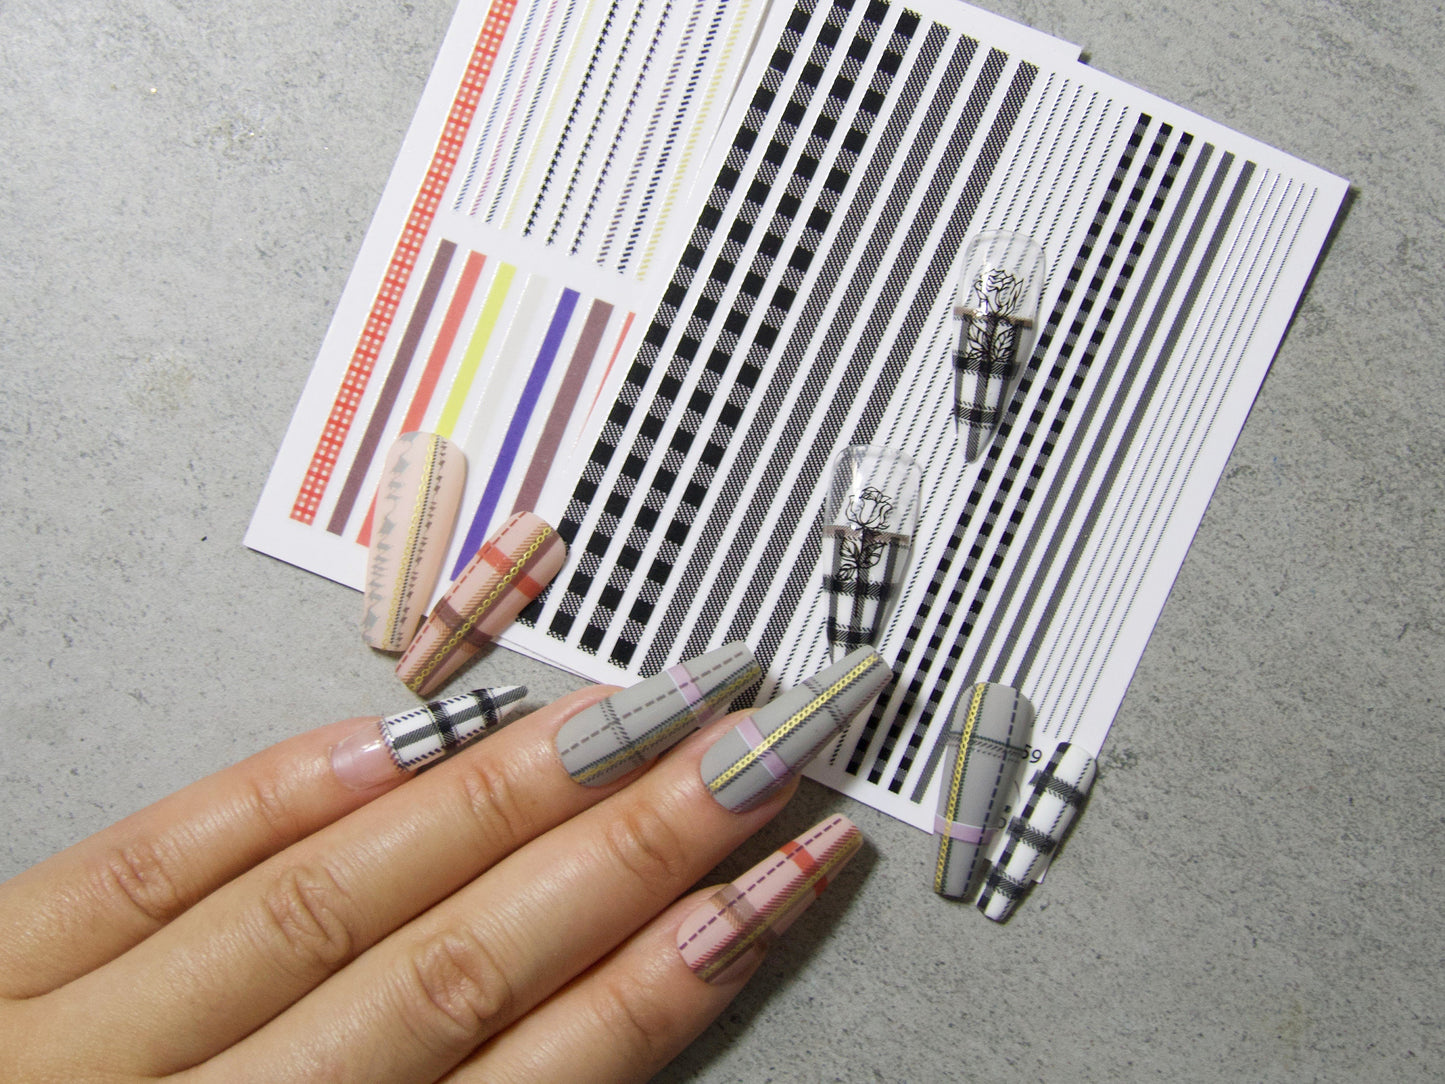 Tweed Plaid Pattern Nail Art Sticker/ Stripe Checkered Peel Off Tips Stickers/ Stripes scottish plaid Tartan holiday winter nails decals